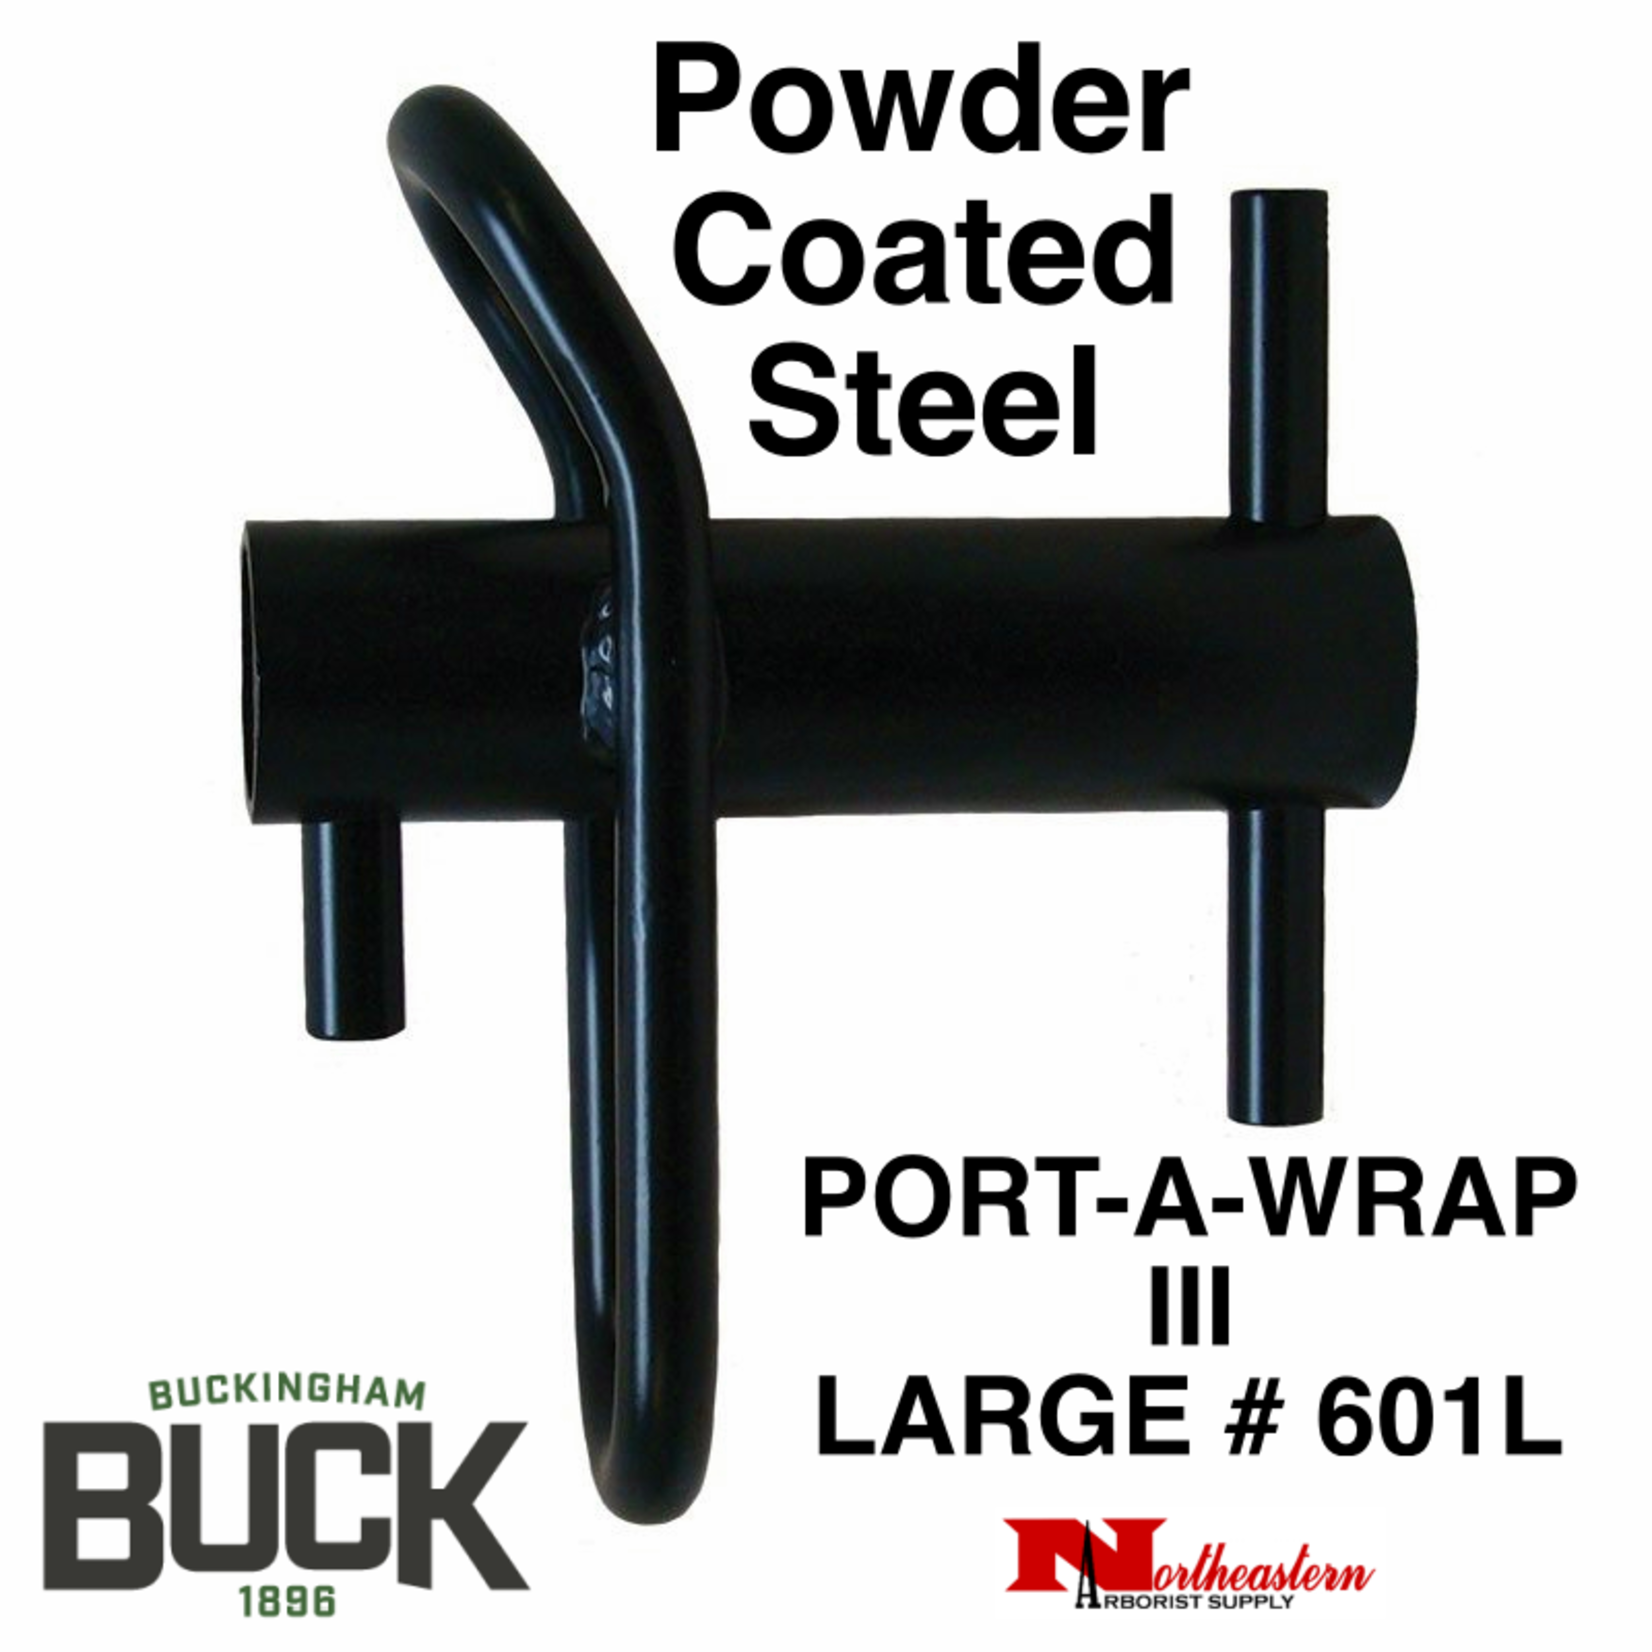 Buckingham Port-A-Wrap III, Powder Coated, Large